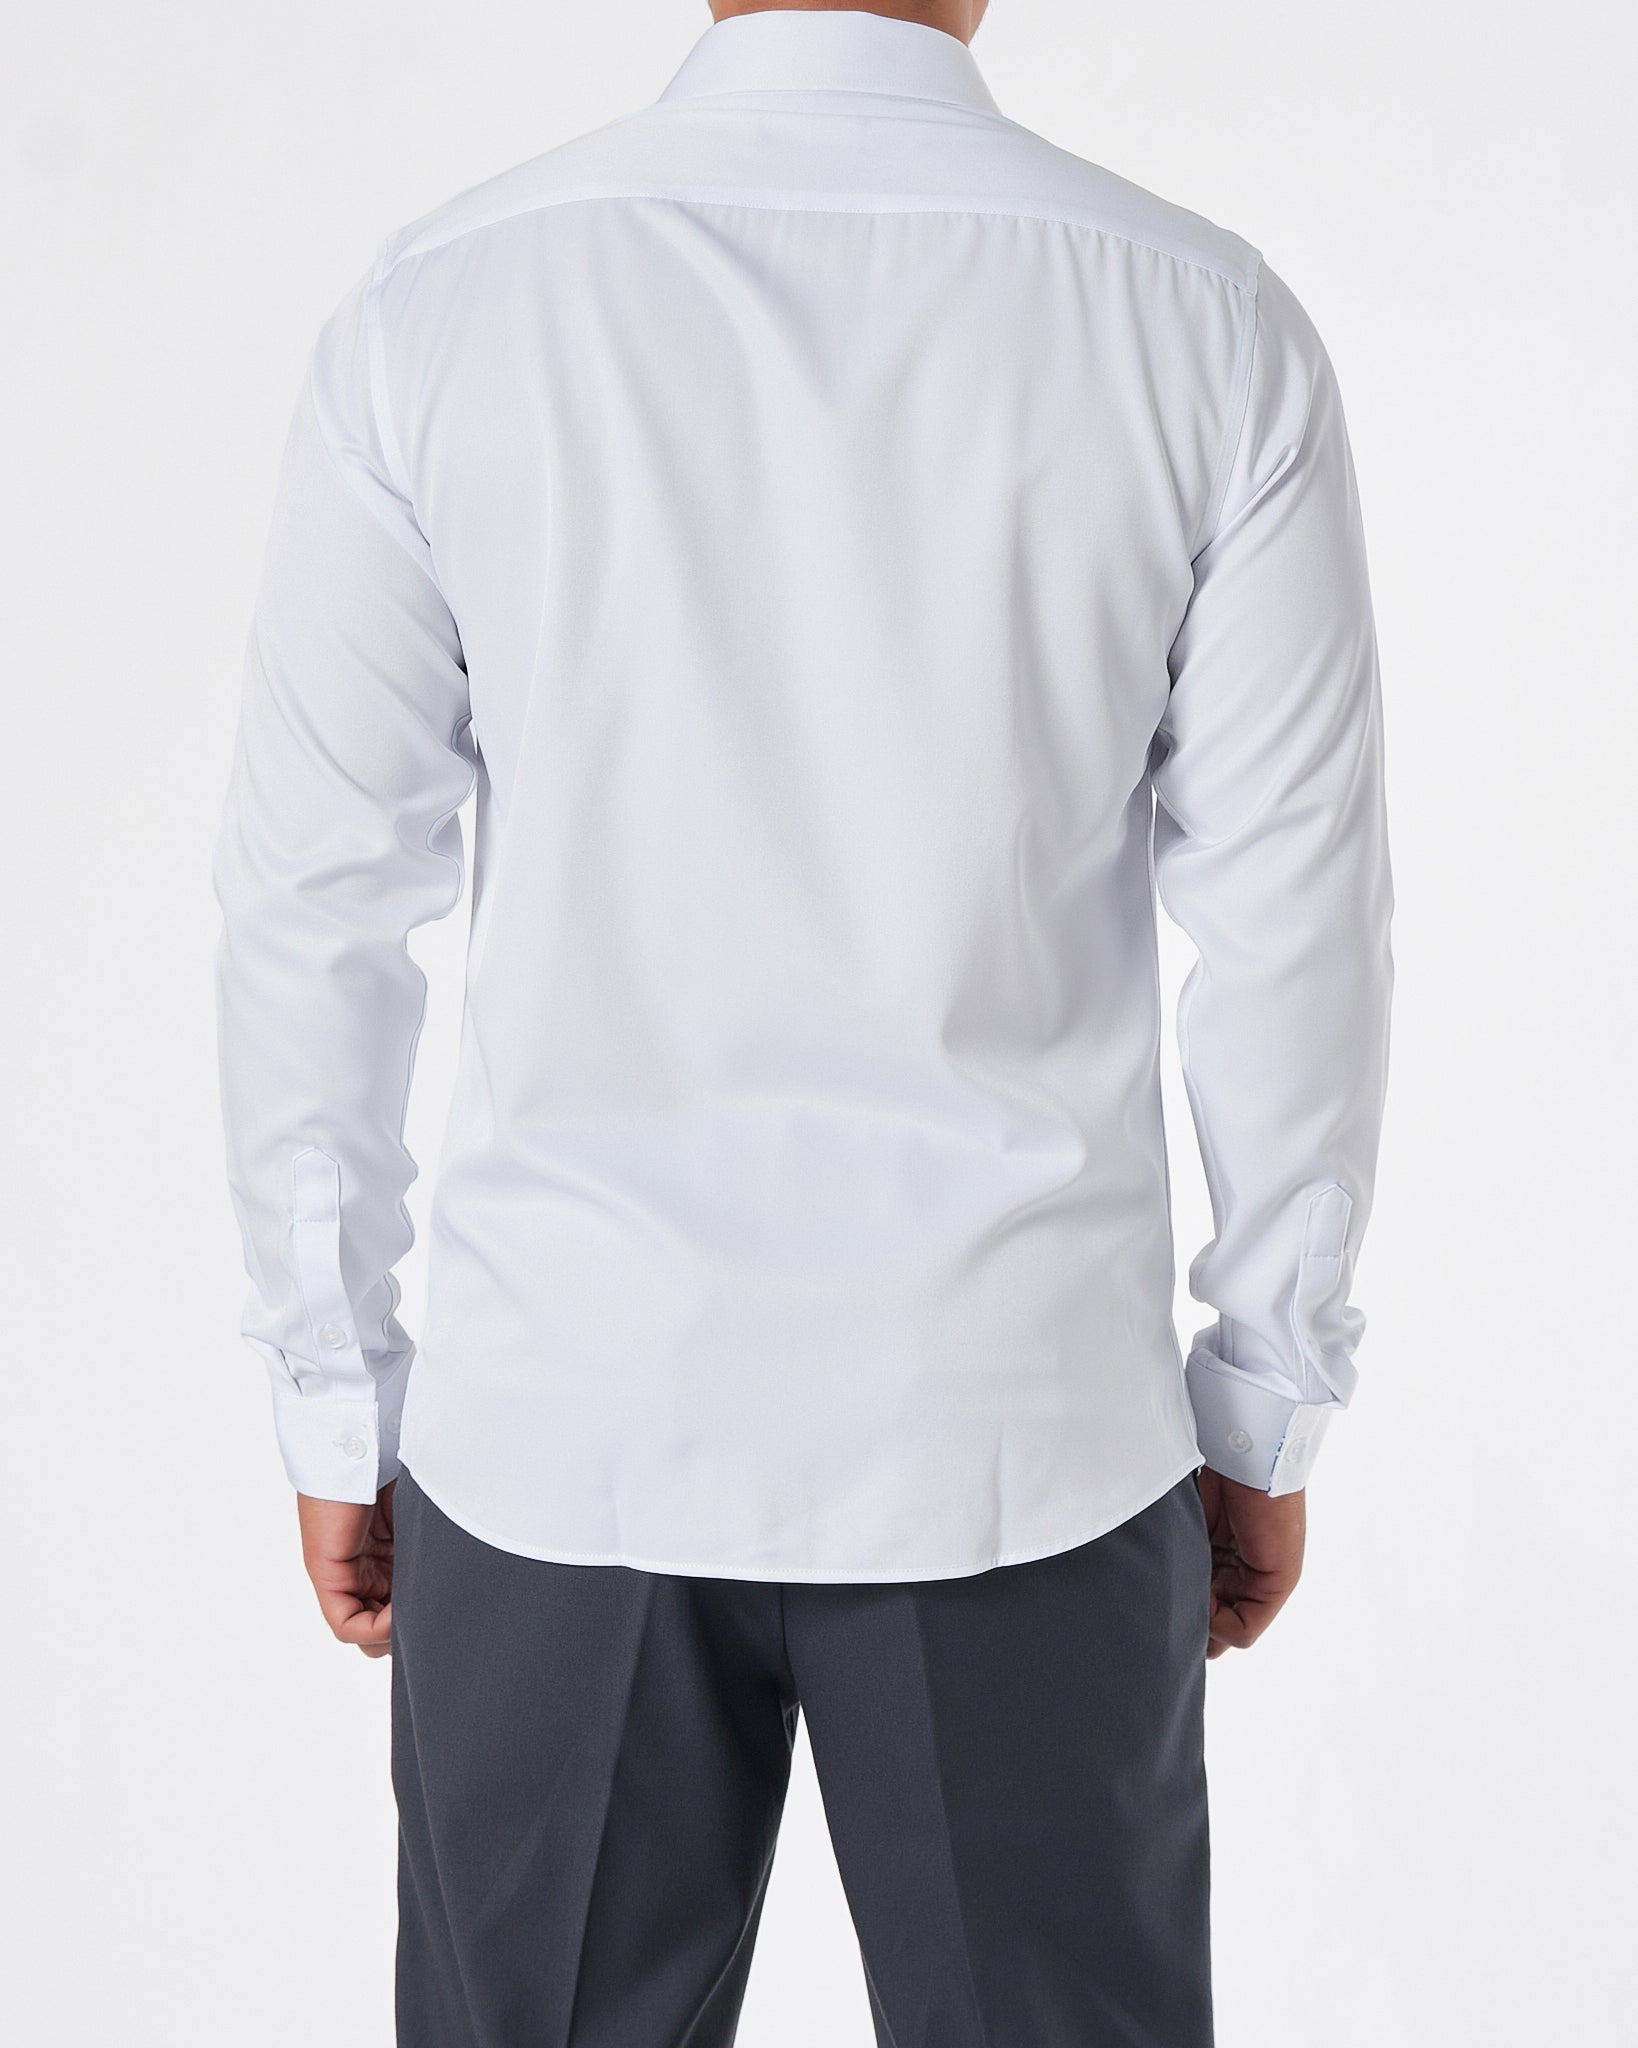 FEN Logo Embroidered Men White Shirts Long Sleeve 22.90